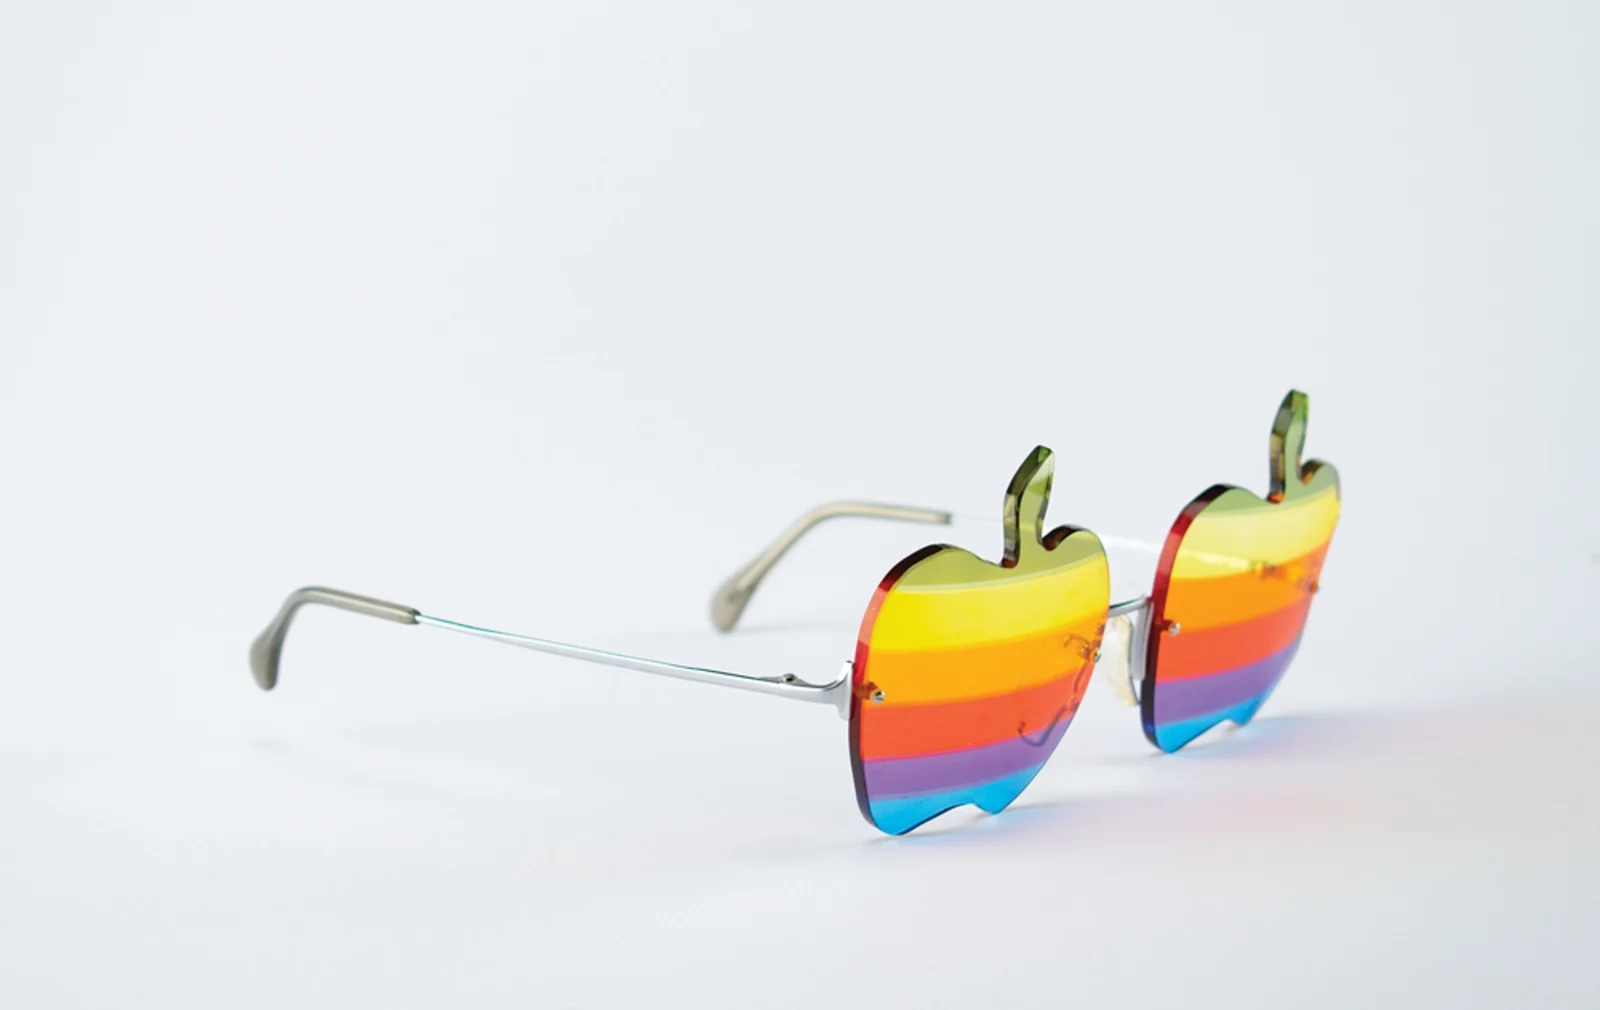 Unos lentes de arcoiris con forma de manzana rematados en $18,972.50 dólares